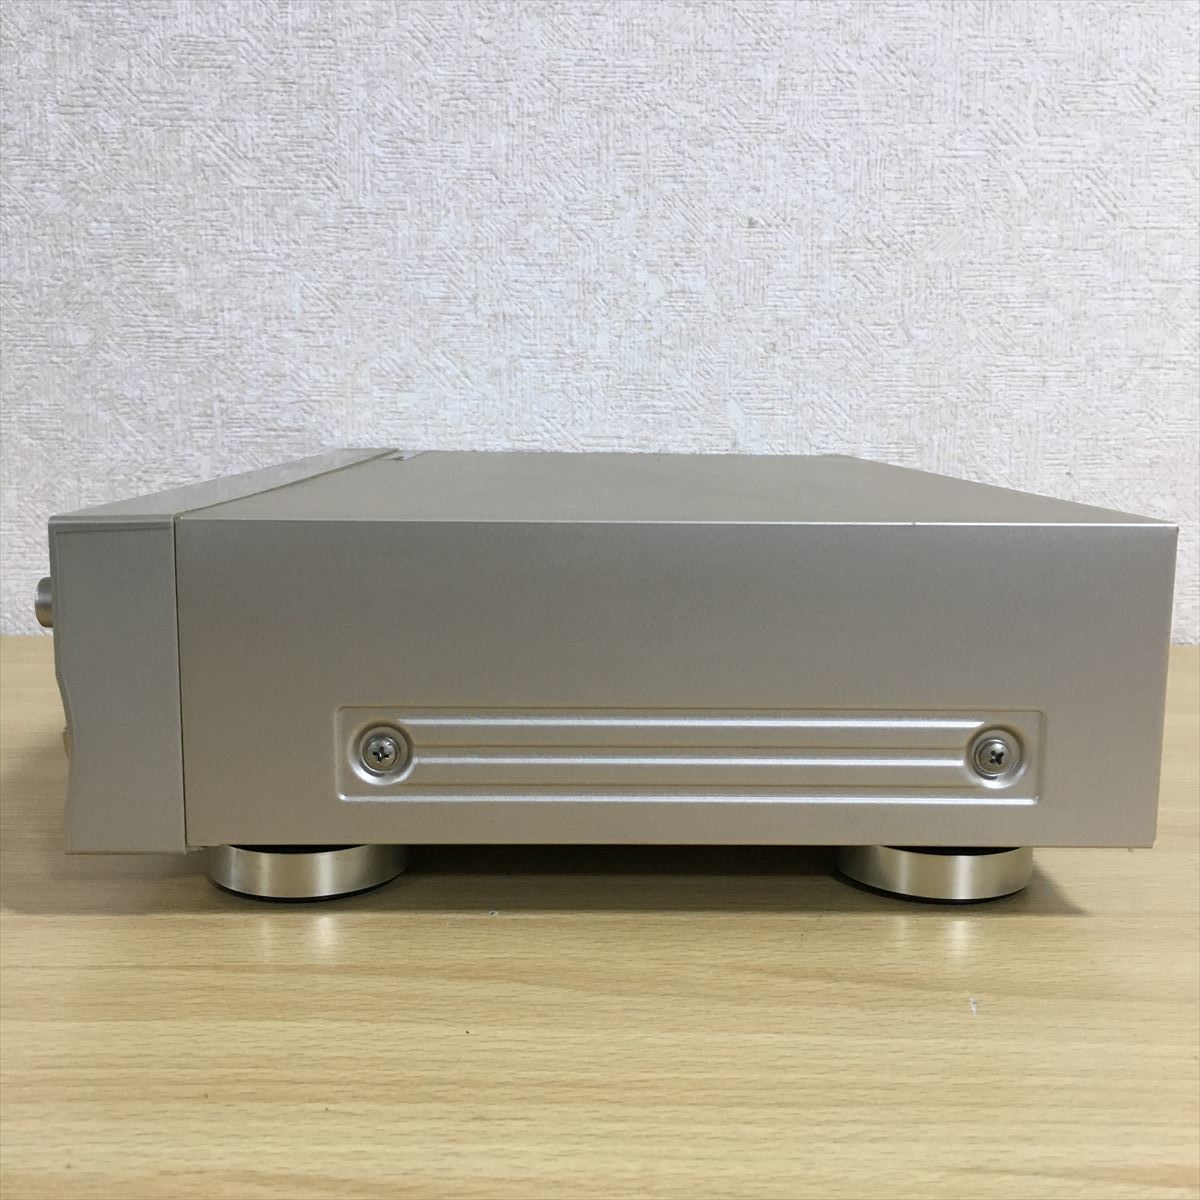 pioneer パイオニア CDレコーダー PDR-D50 CDプレイヤー CDプレーヤー CDデッキ CD コンパクトディスク オーディオ機器 音響機器 1 シ 6477_画像2